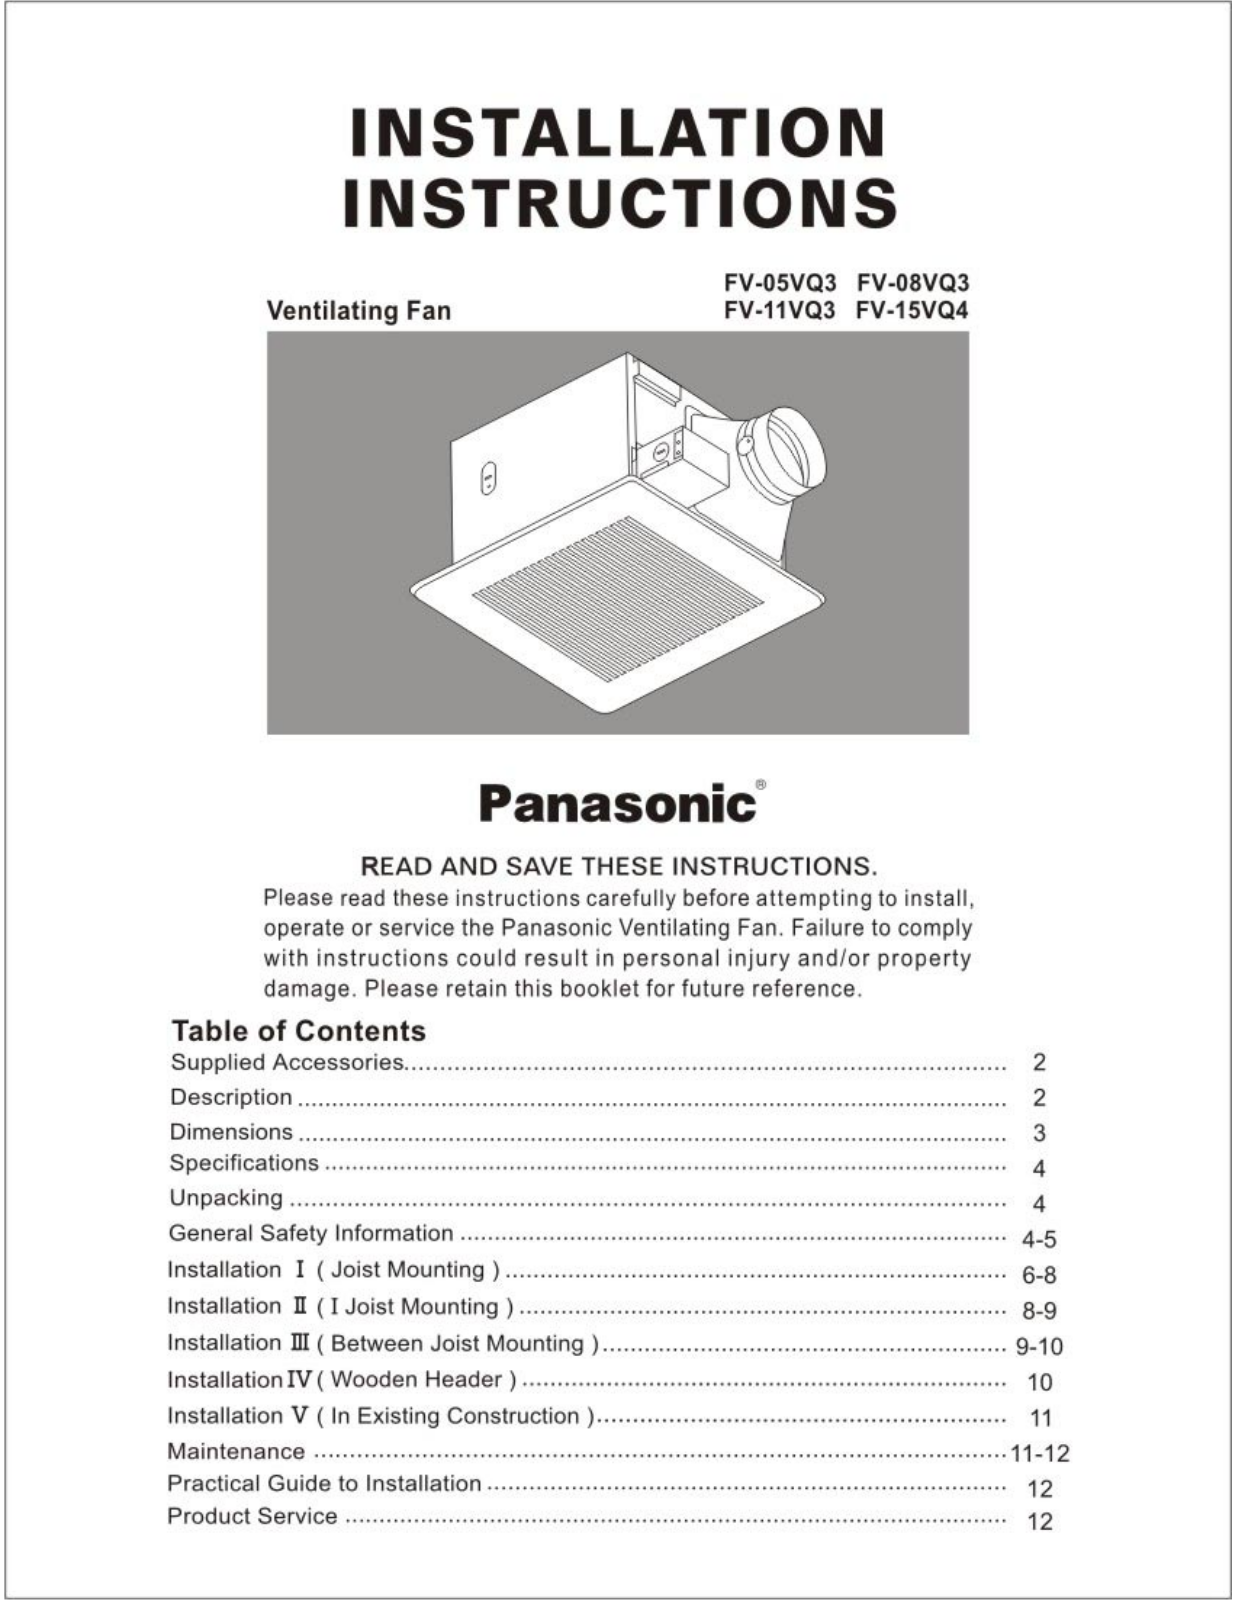 Panasonic fv-xxvq3, fv-15vq4 Operation Manual